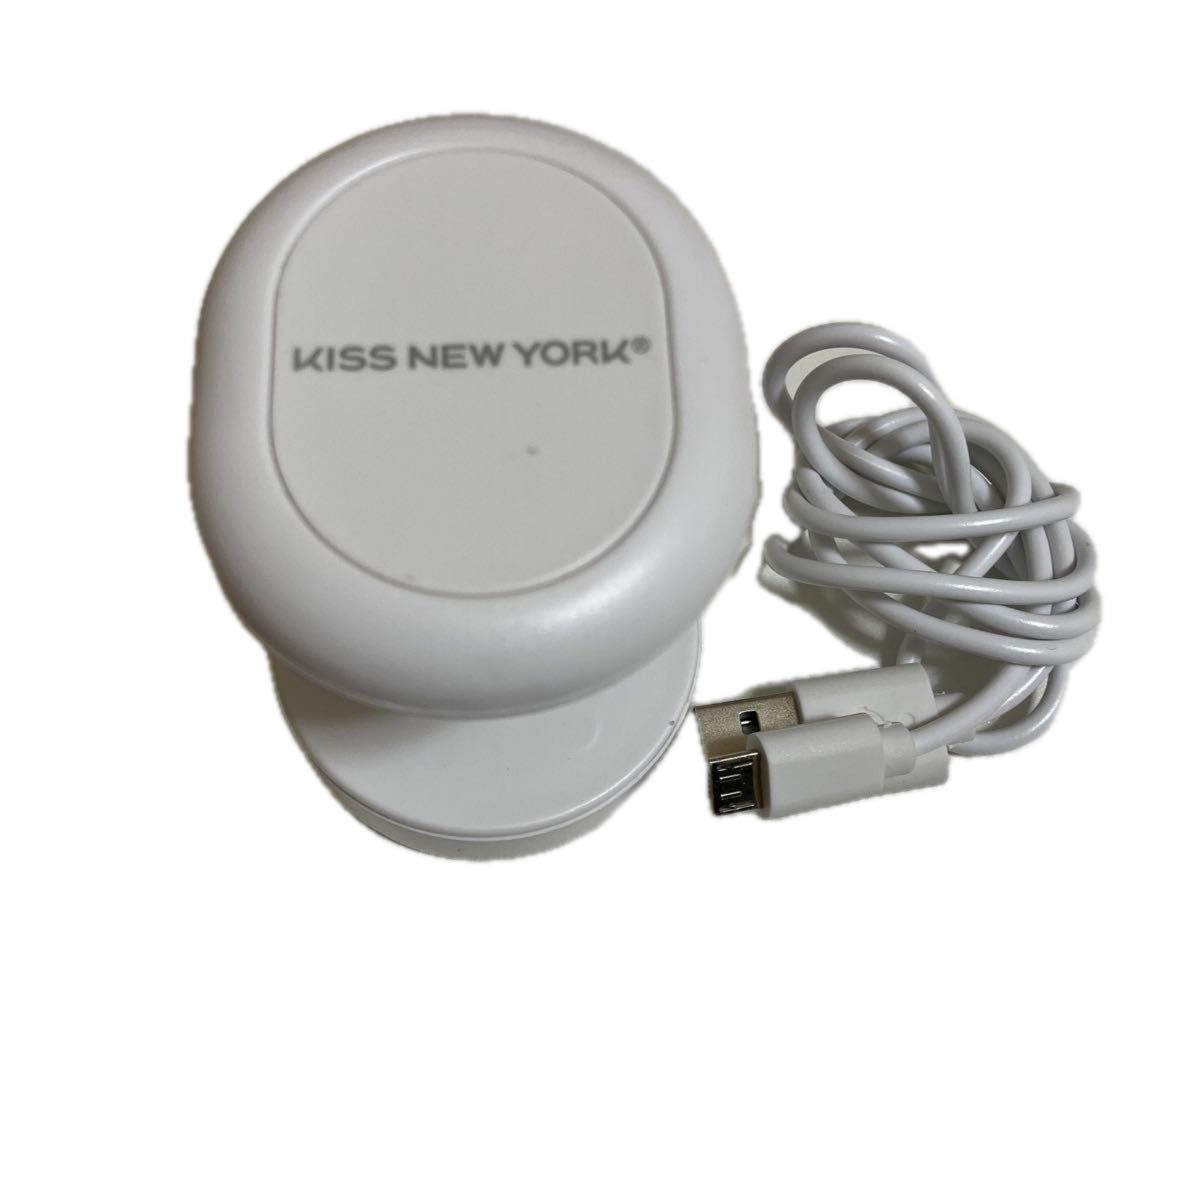 【USED品・箱に傷有・説明書付】KISS NEW YORK コンパクトジェルランプ ジェルネイル 硬化ライト USBタイプ 